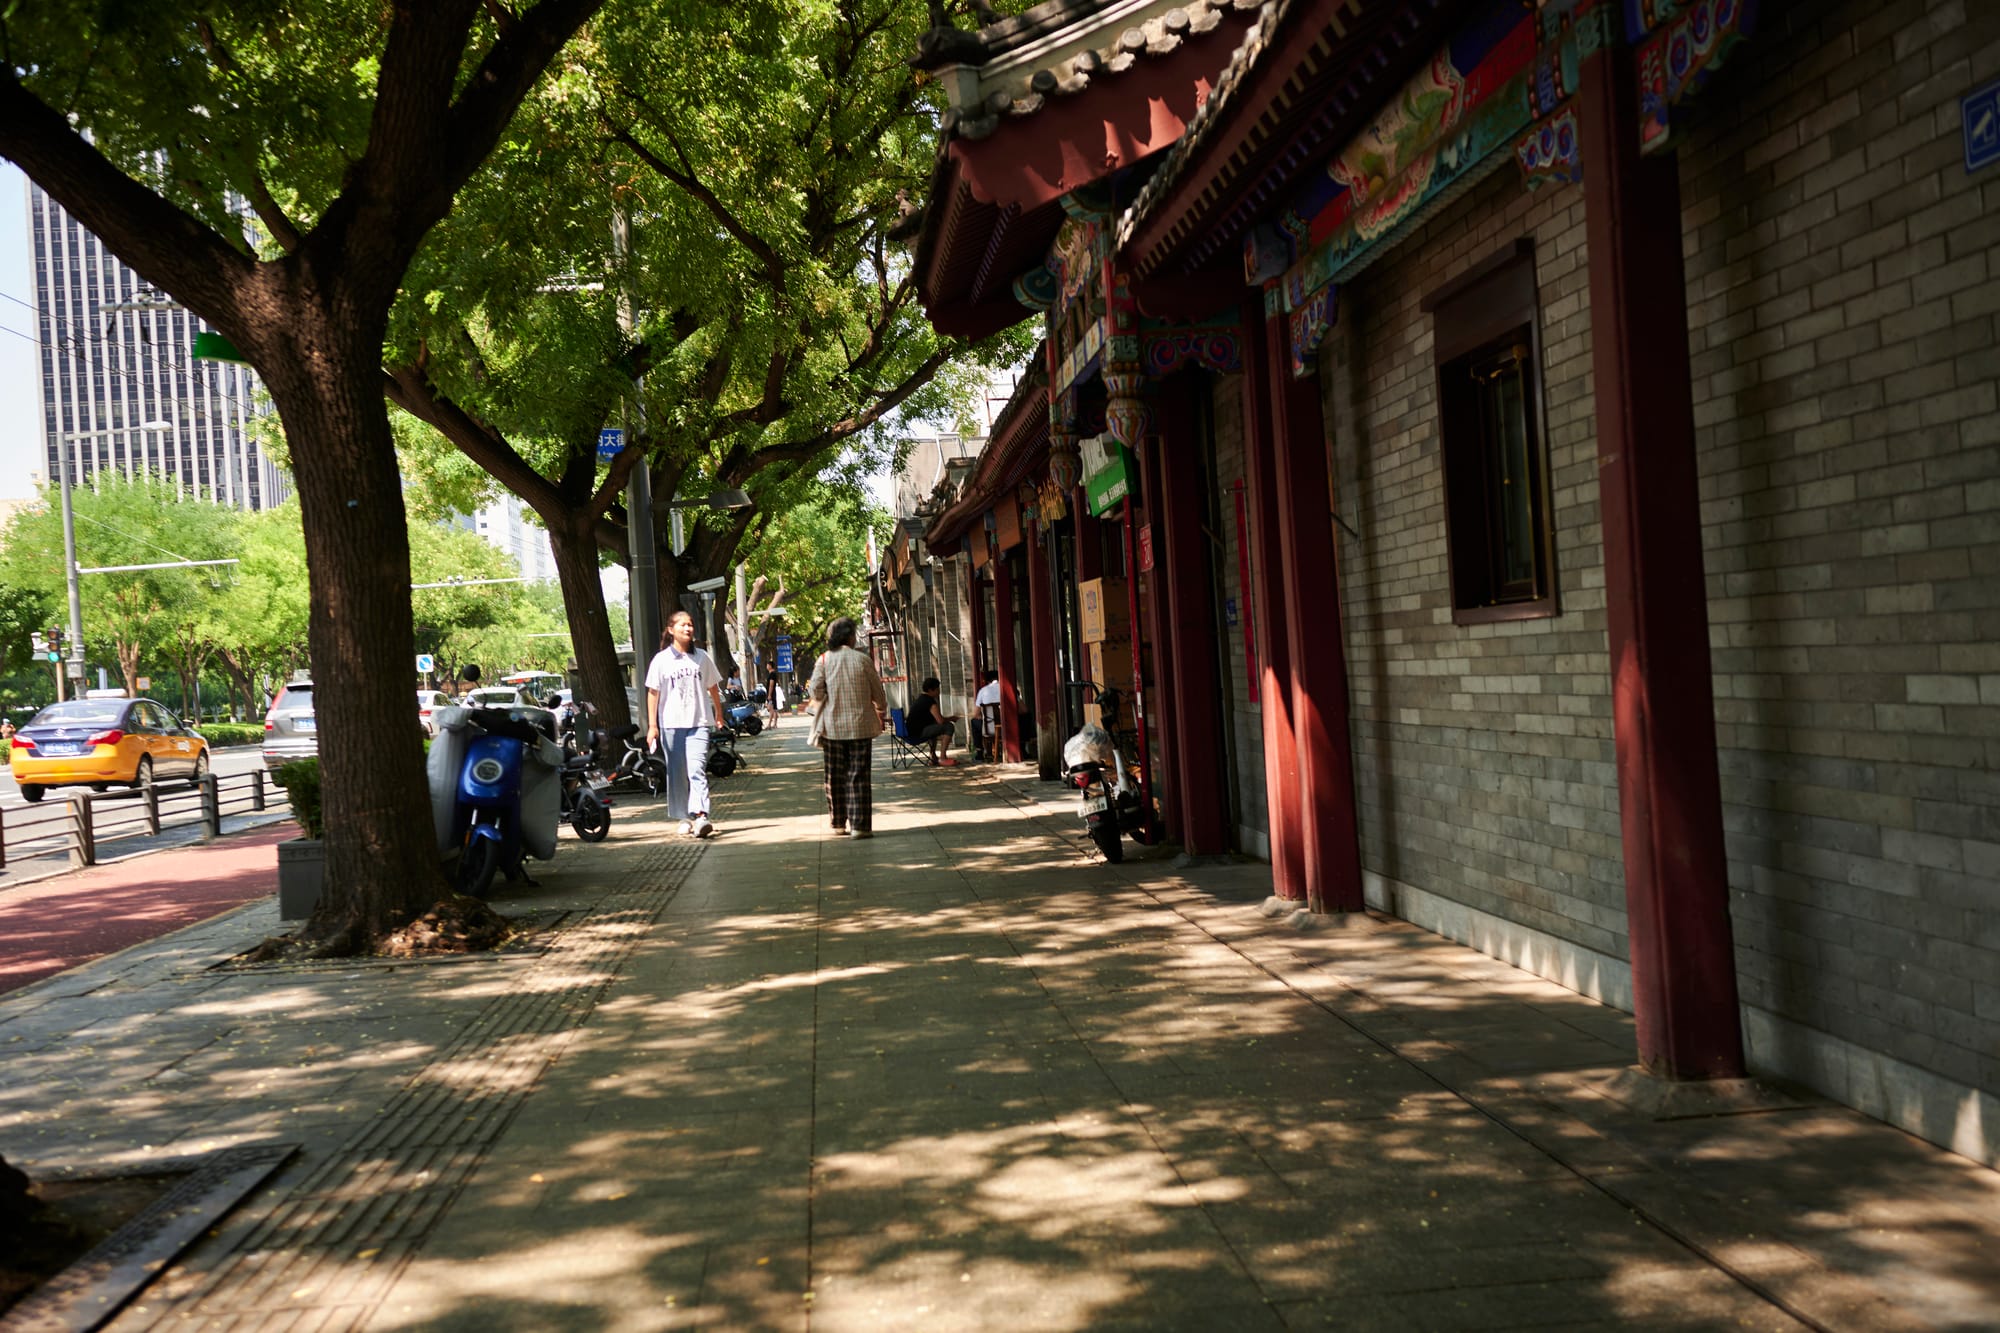 Explore Beijing like a local